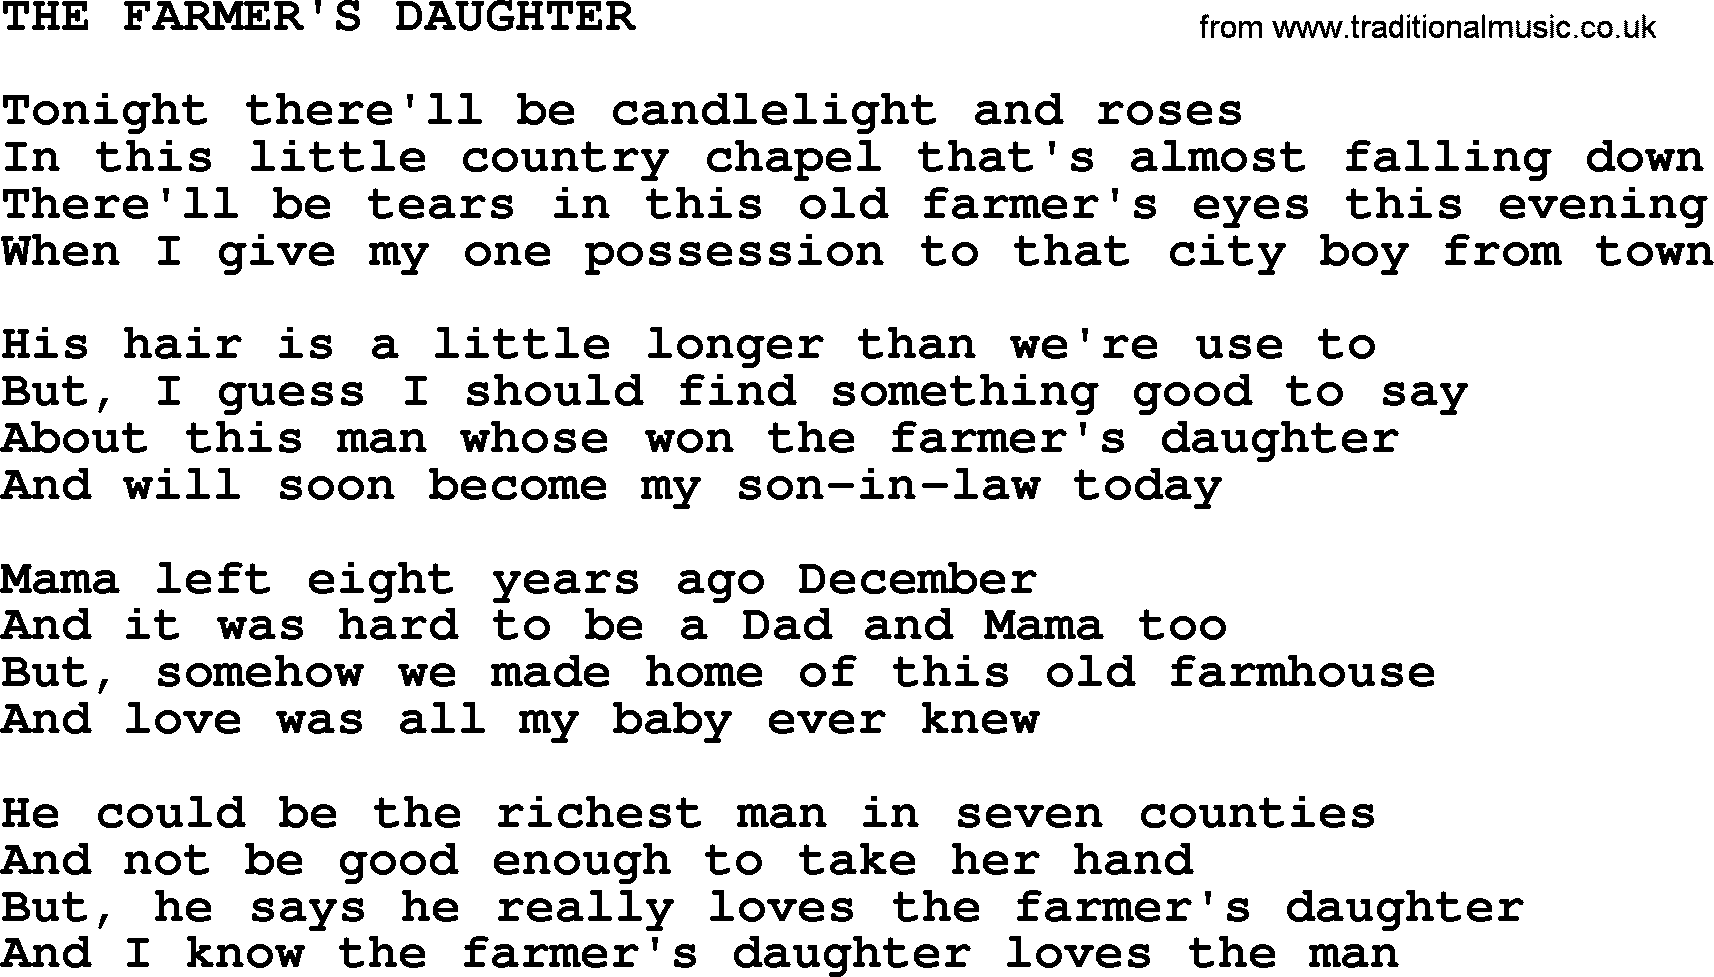 Merle Haggard song: The Farmer's Daughter, lyrics.